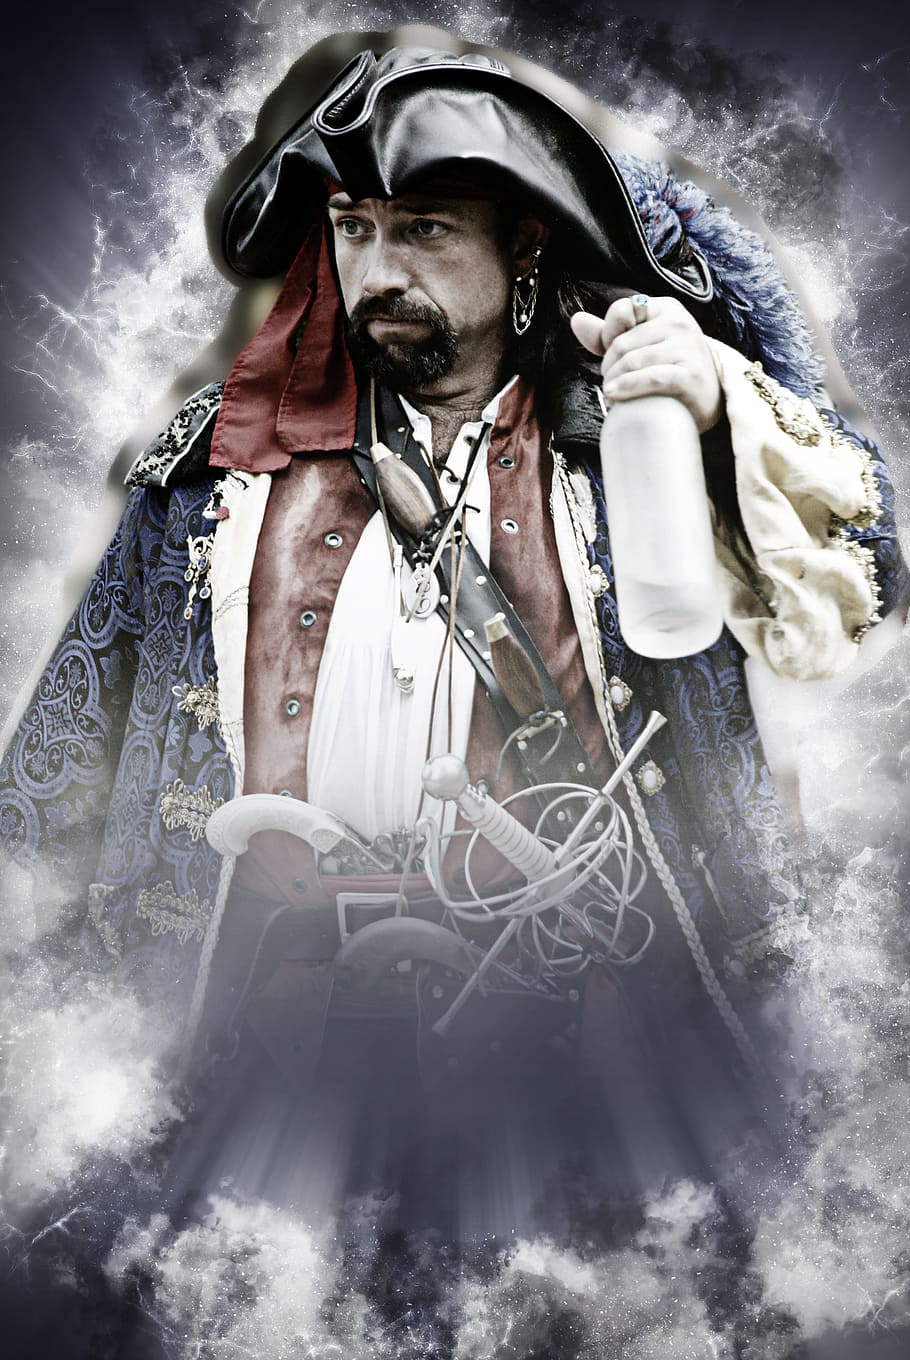 pirate, bottle, rum, buccaneer, captain, costume, hat, sailor, sword, person